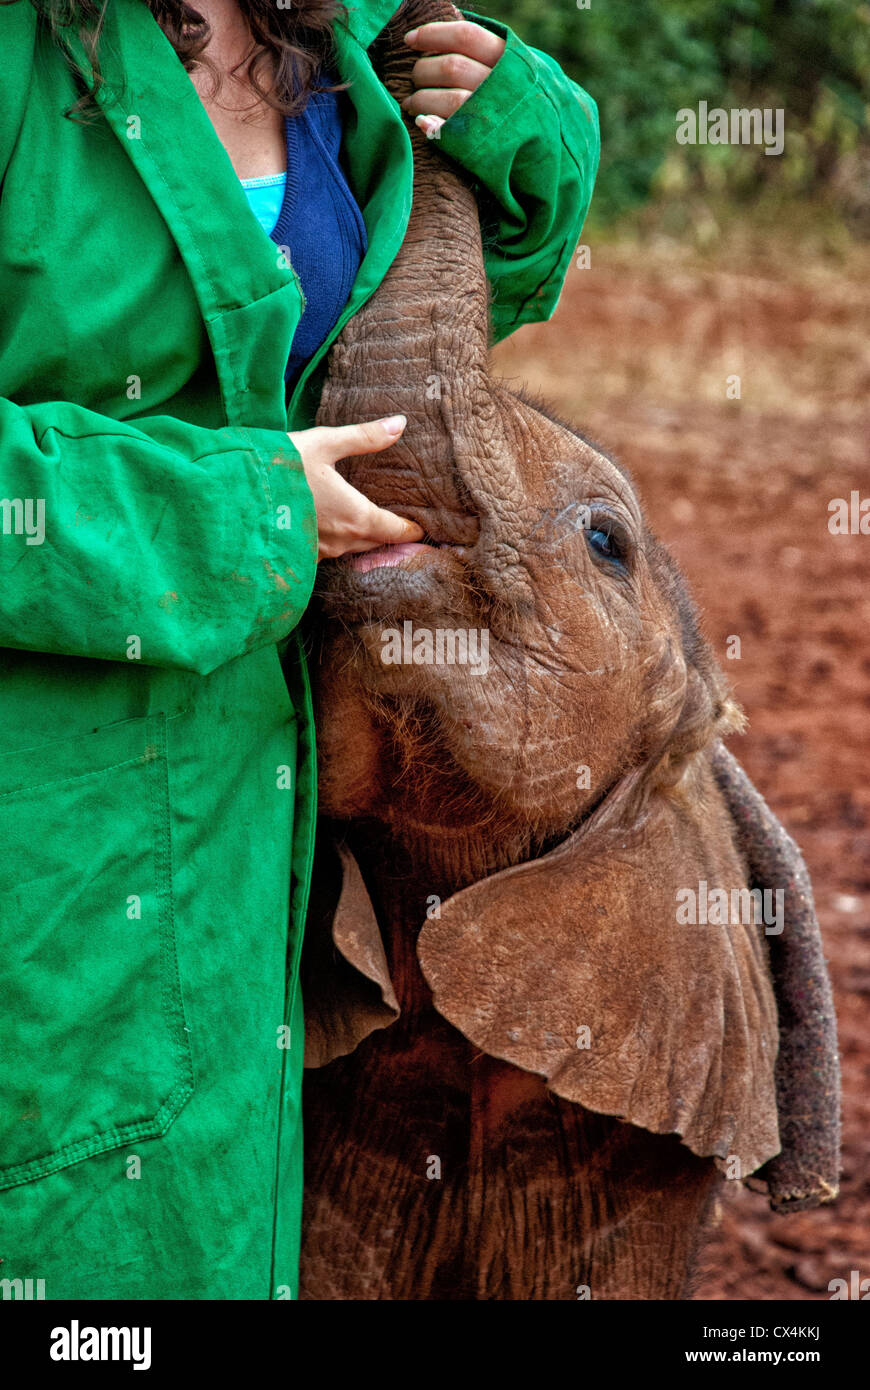 Elefante africano di vitello, Loxodonta africana, aspirando la mano di una guida, Sheldrick l'Orfanotrofio degli Elefanti, Nairobi, Kenya, Africa Foto Stock